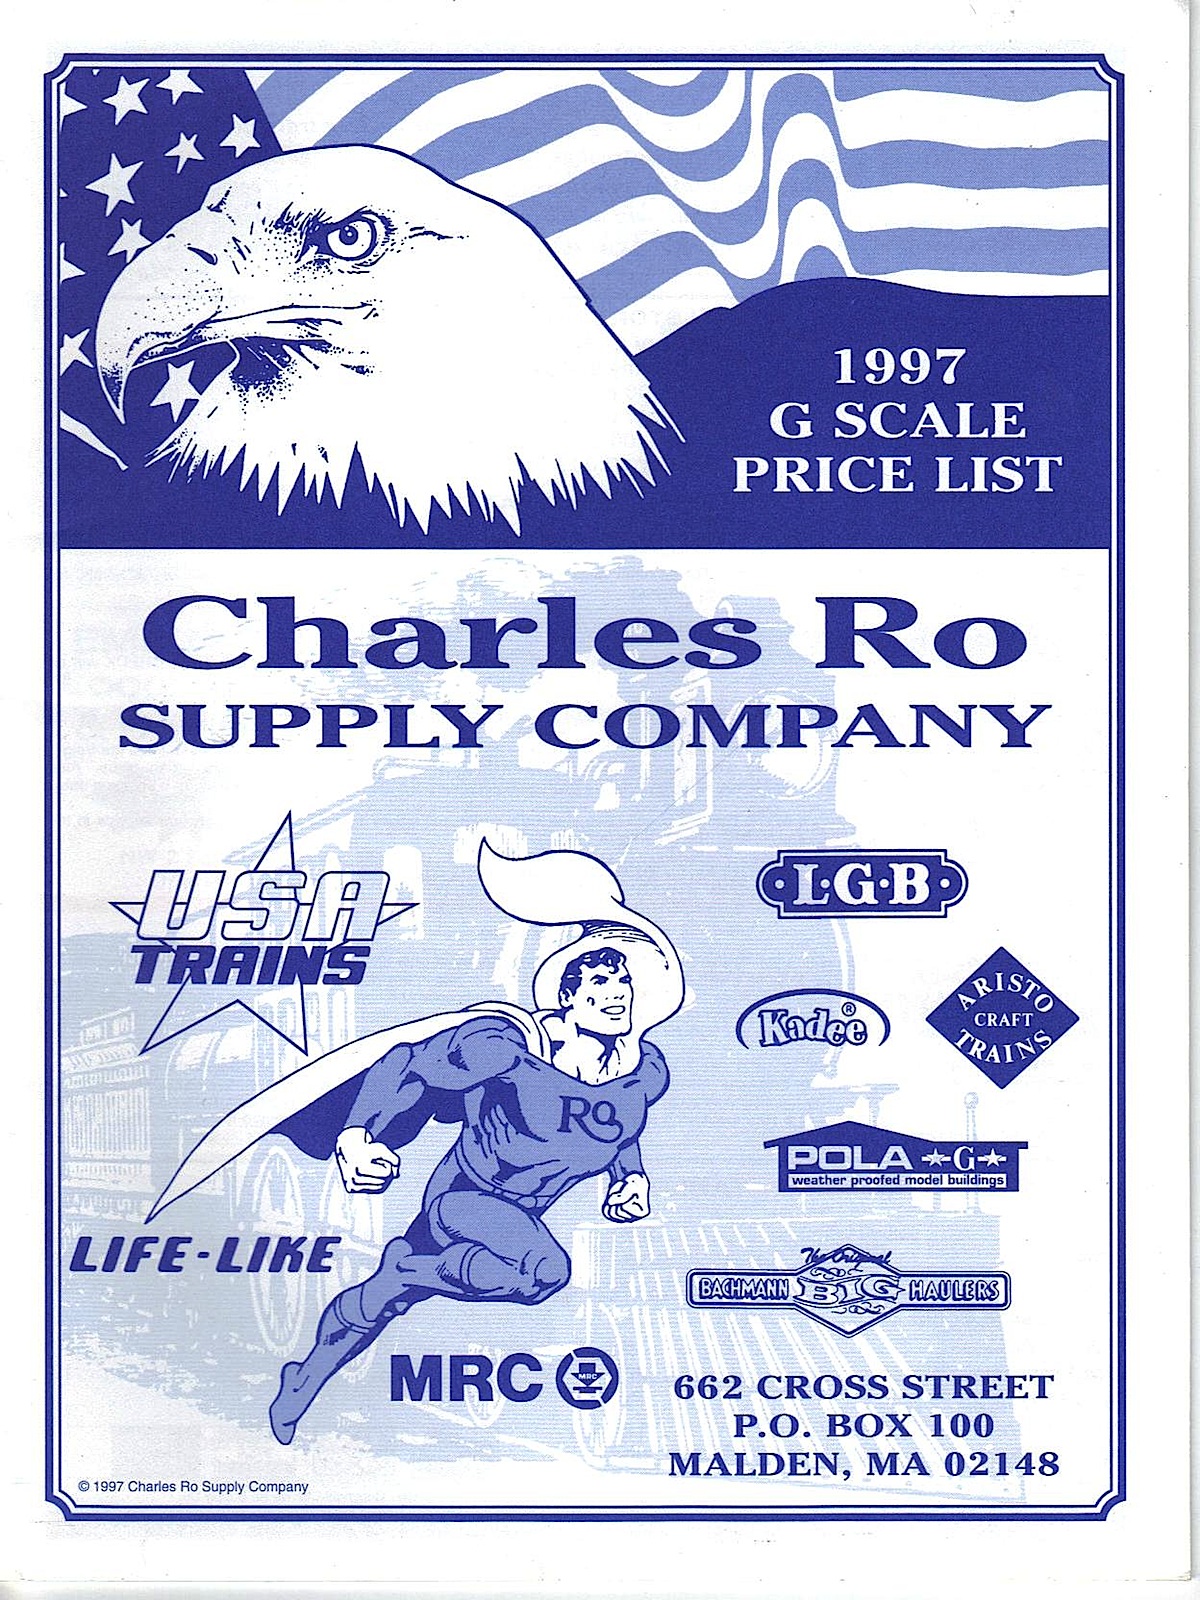 Charles Ro Preisliste 1997 (Charles Ro price list 1997)